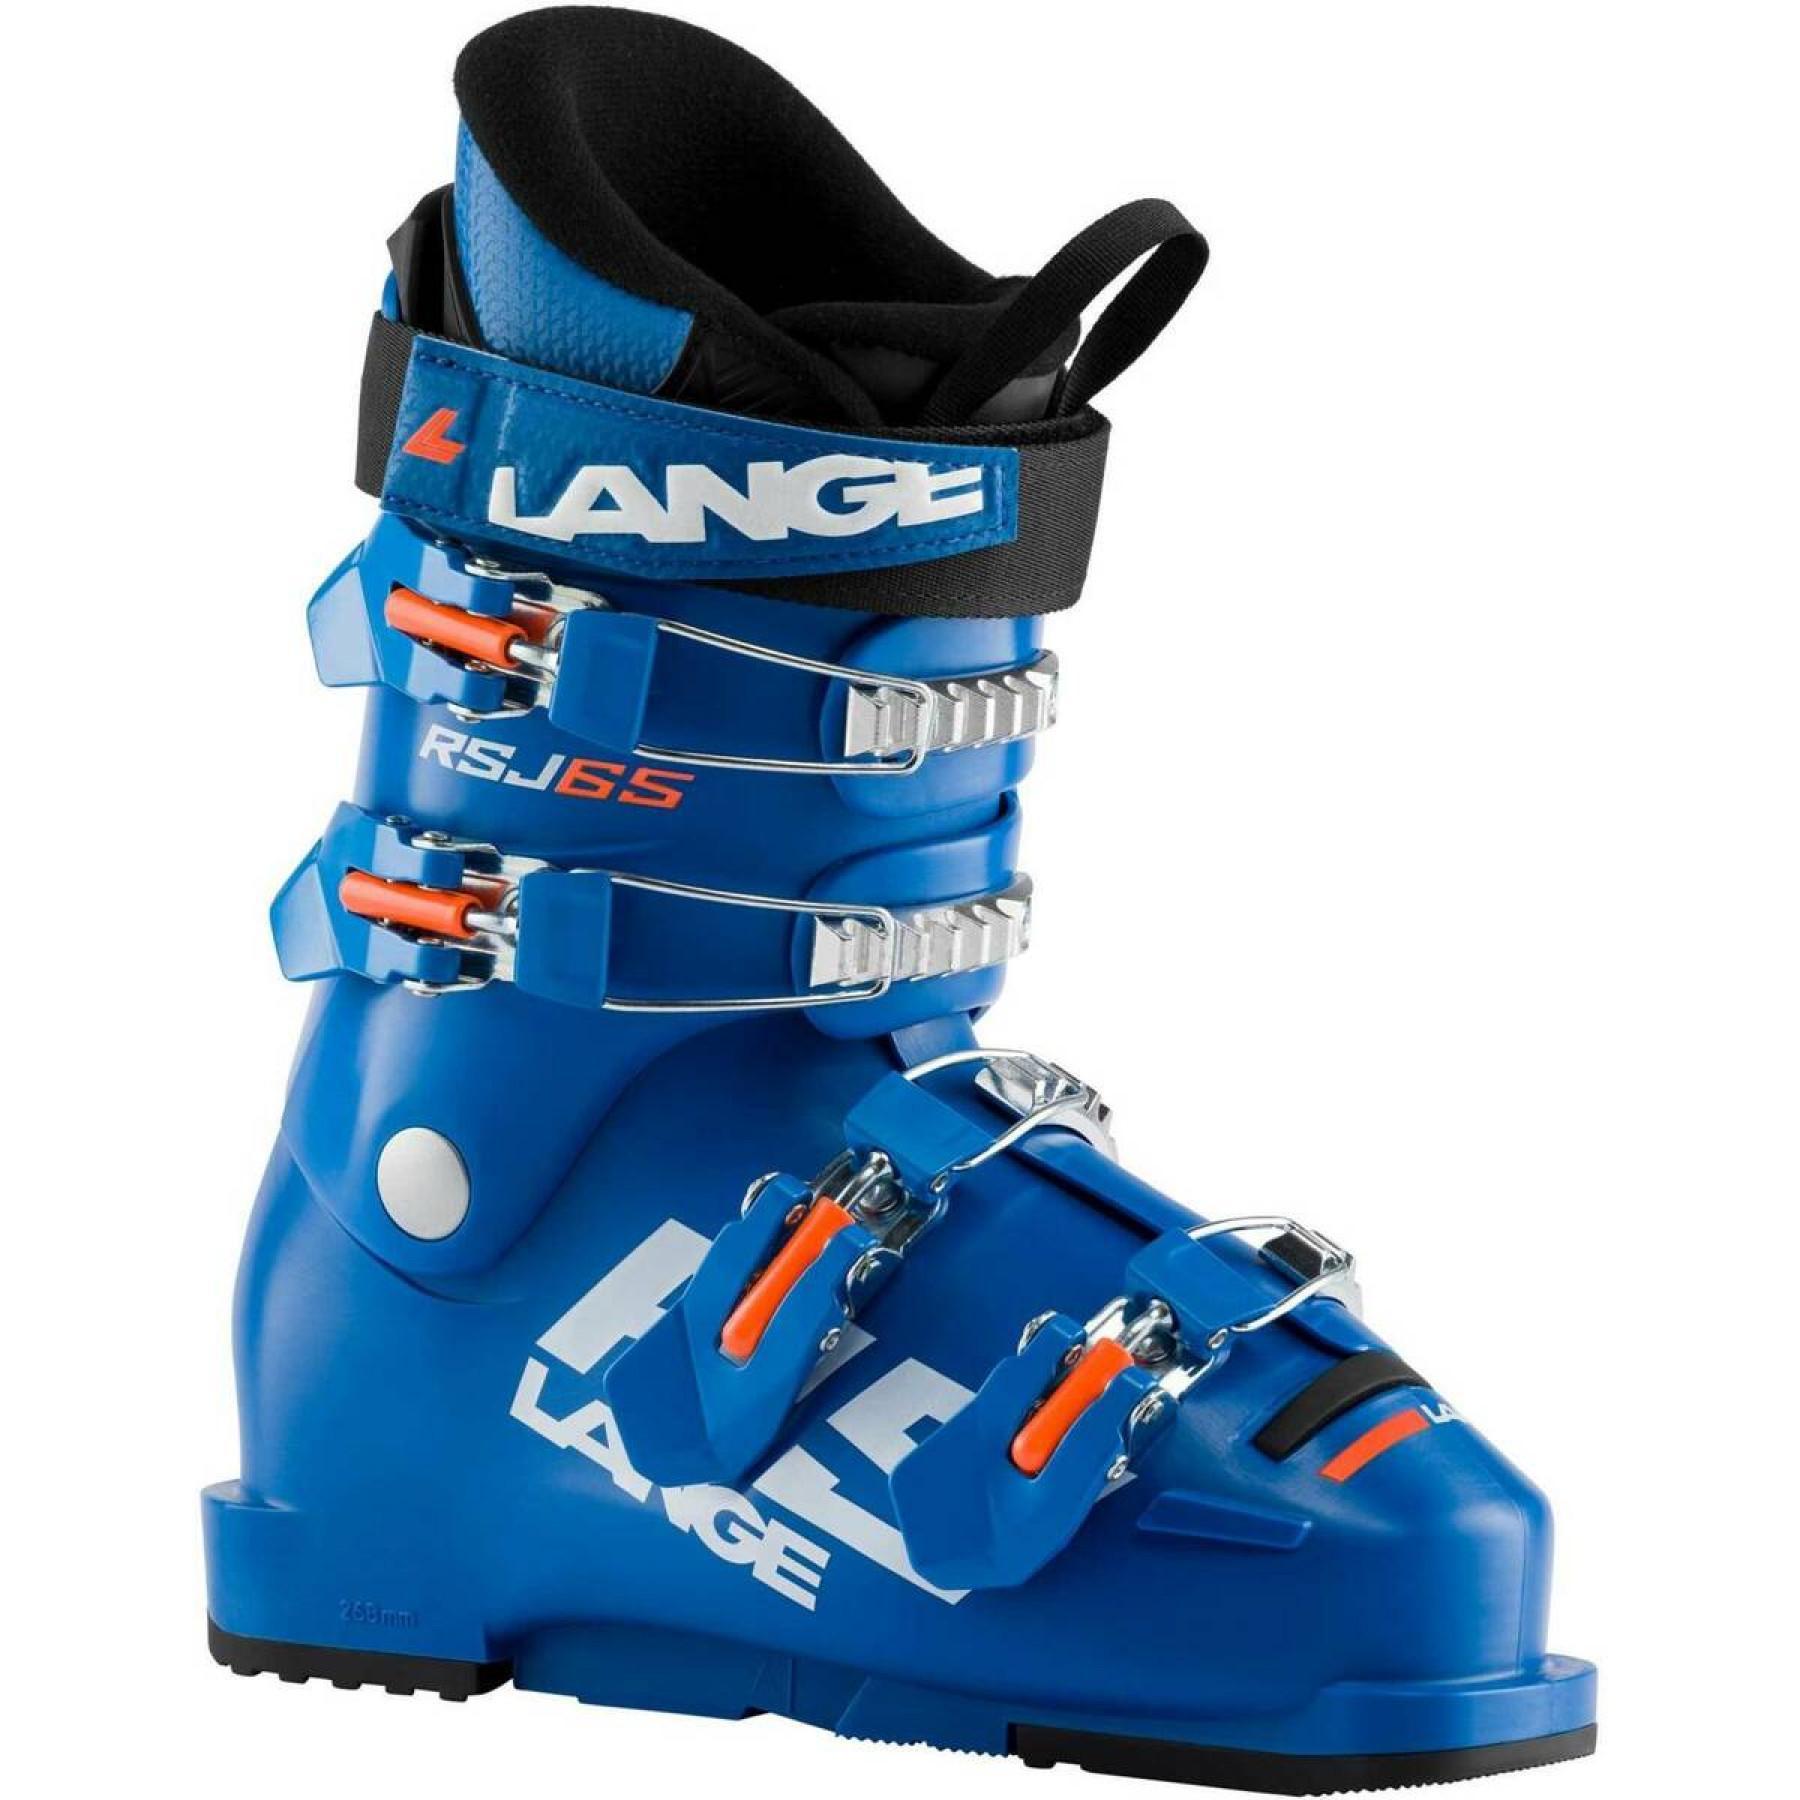 Children ski boots Lange rsj 65